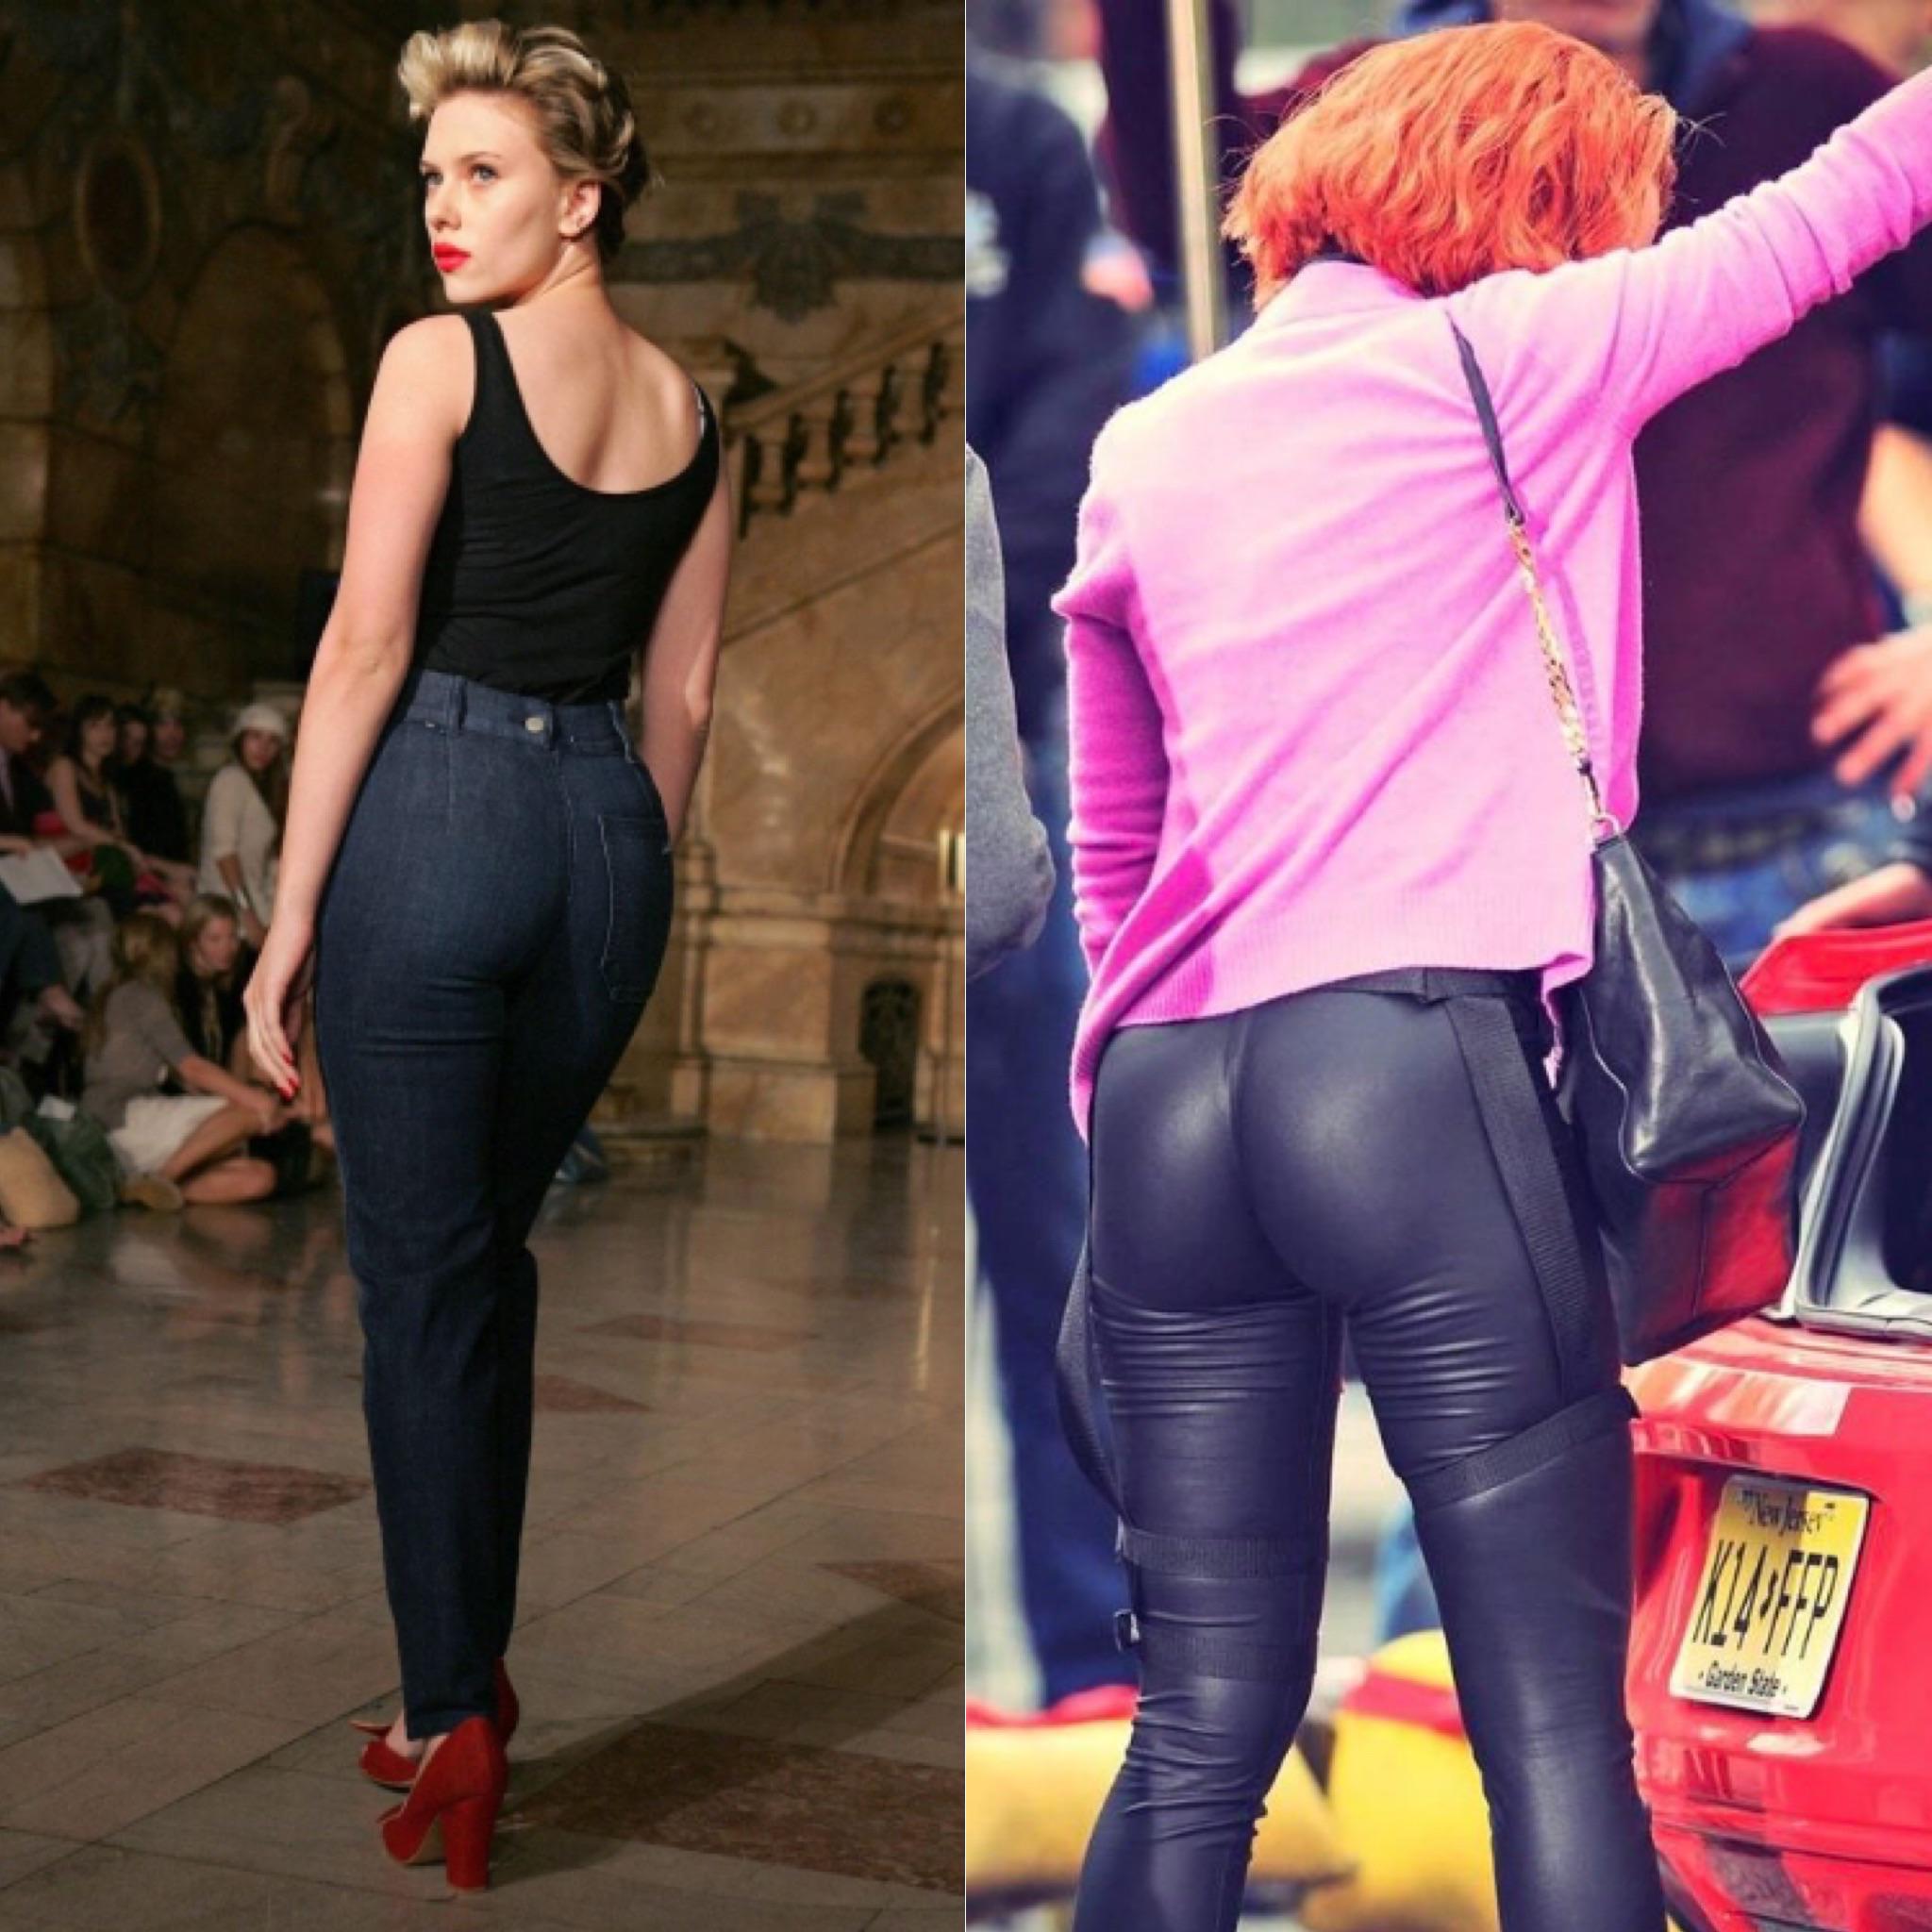 U guys like Scarlett Johanssons ass here right